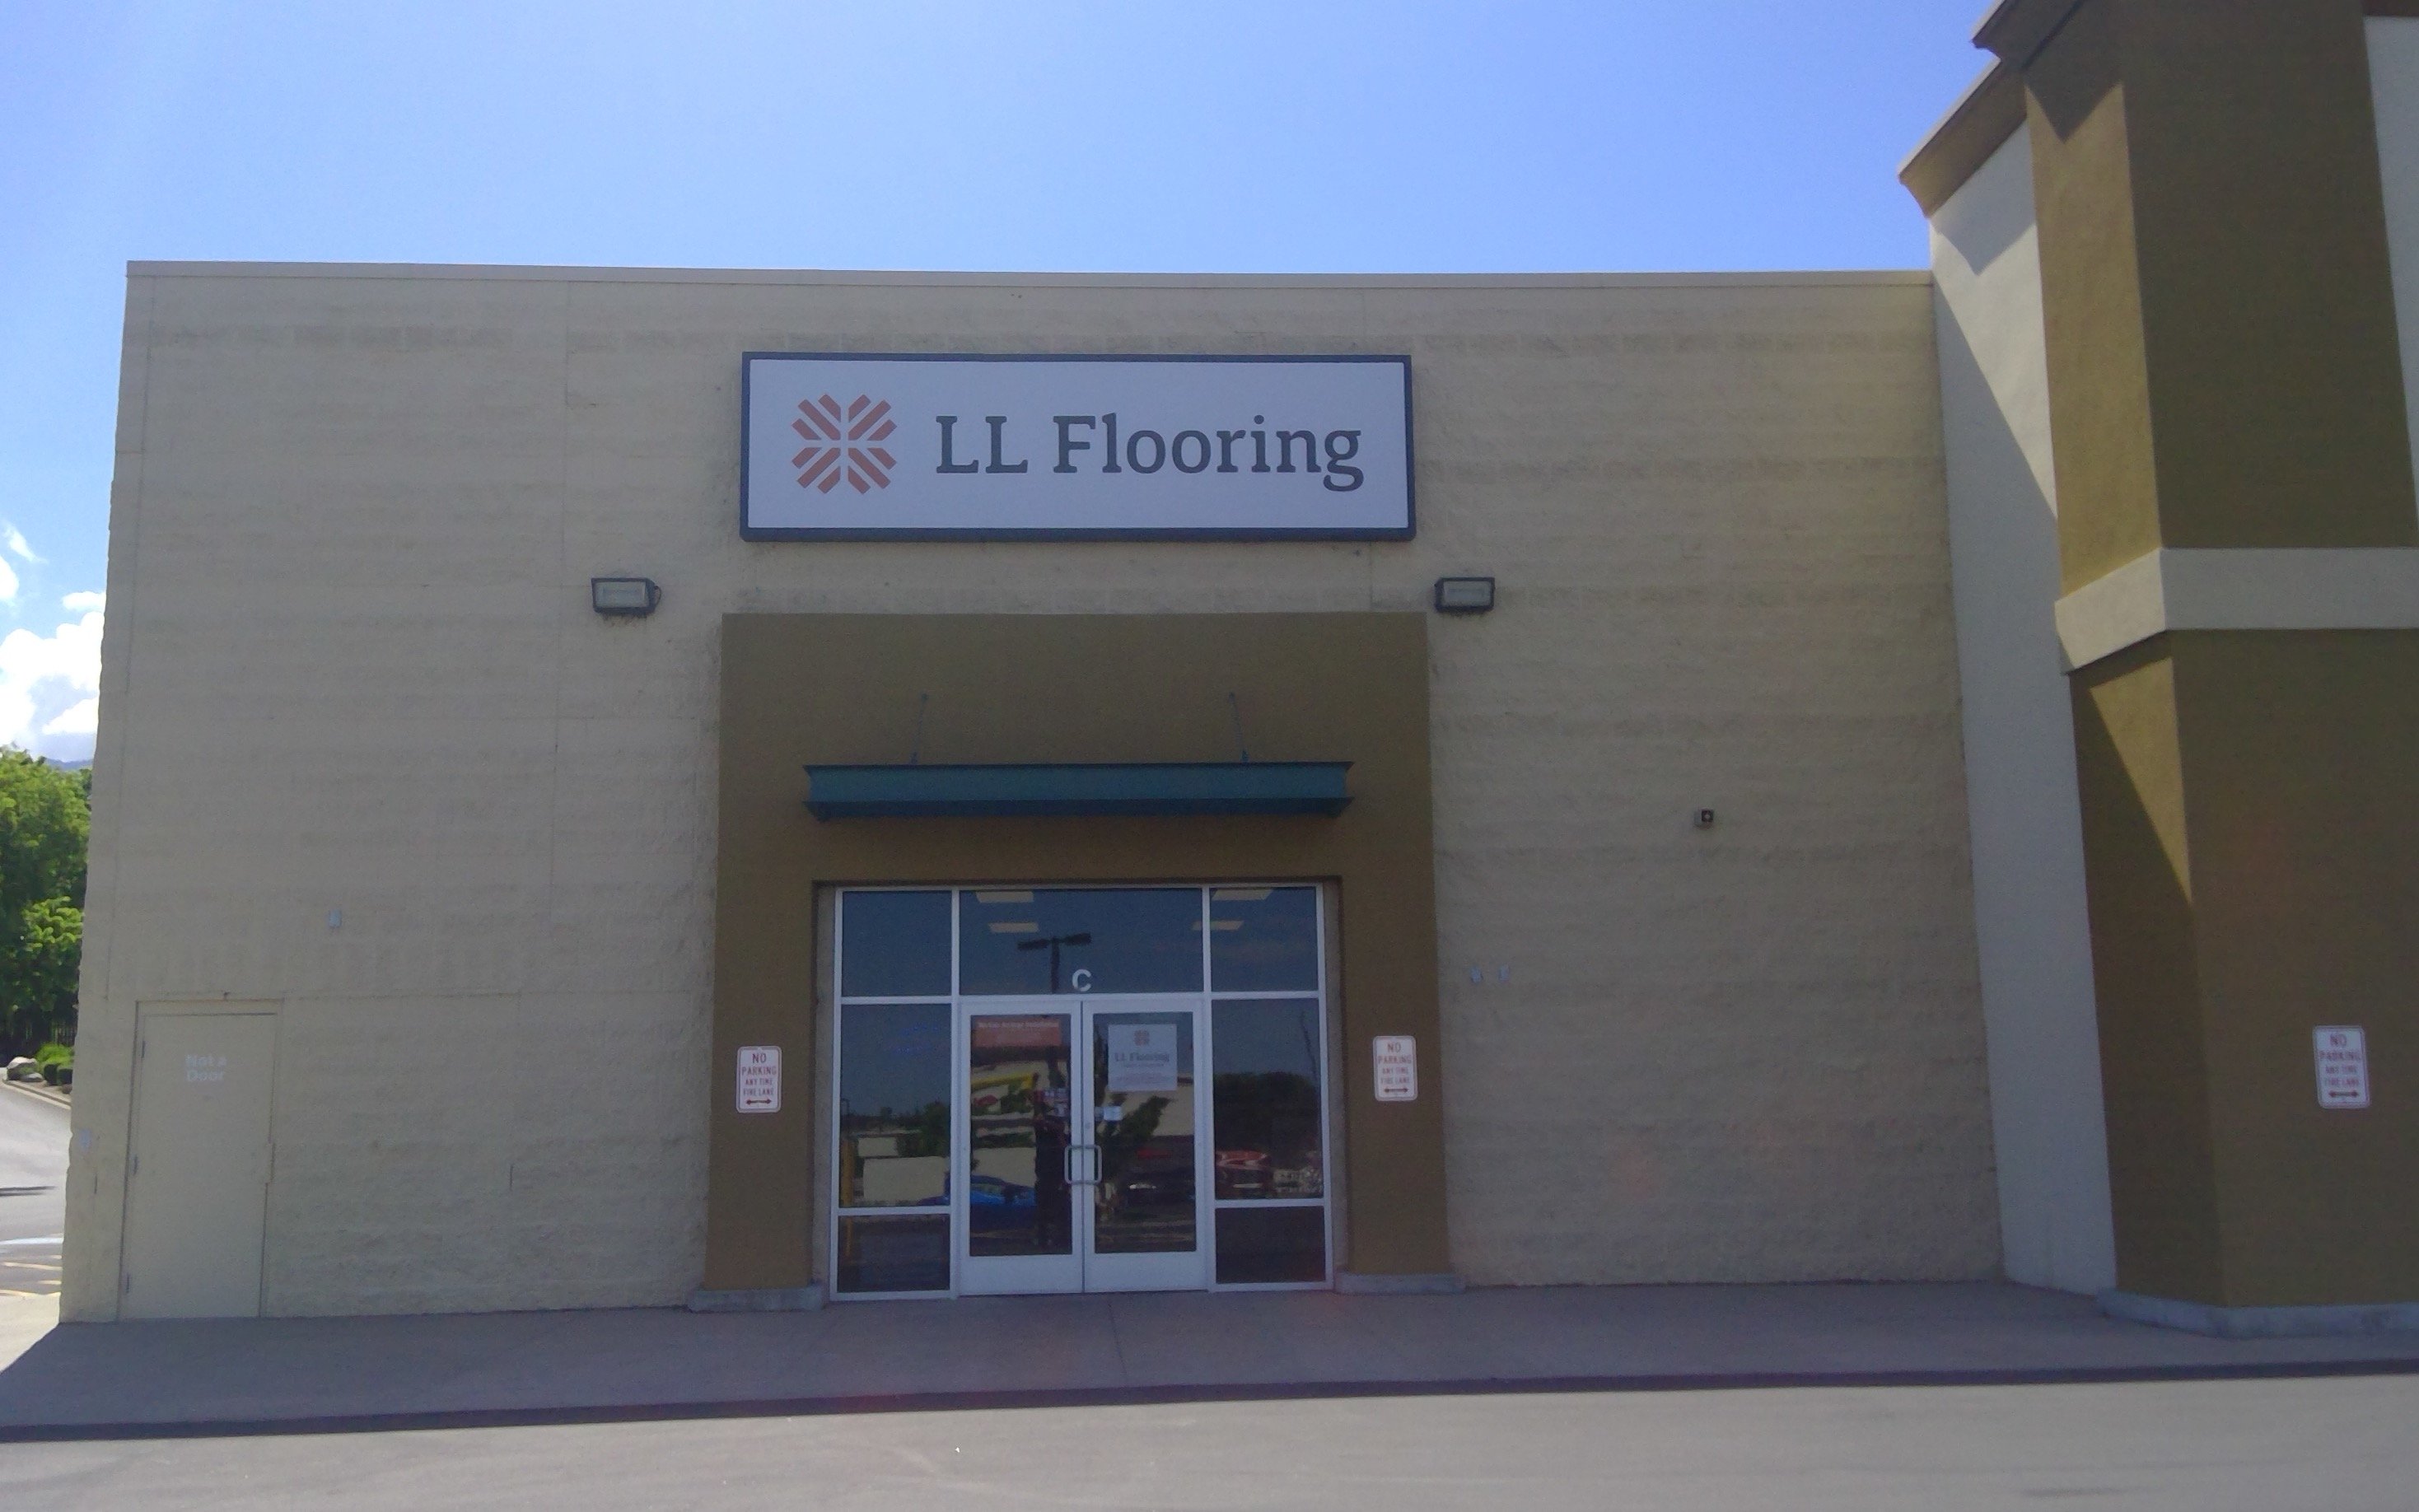 LL Flooring #1386 Riverdale | 4040 Riverdale Road | Storefront